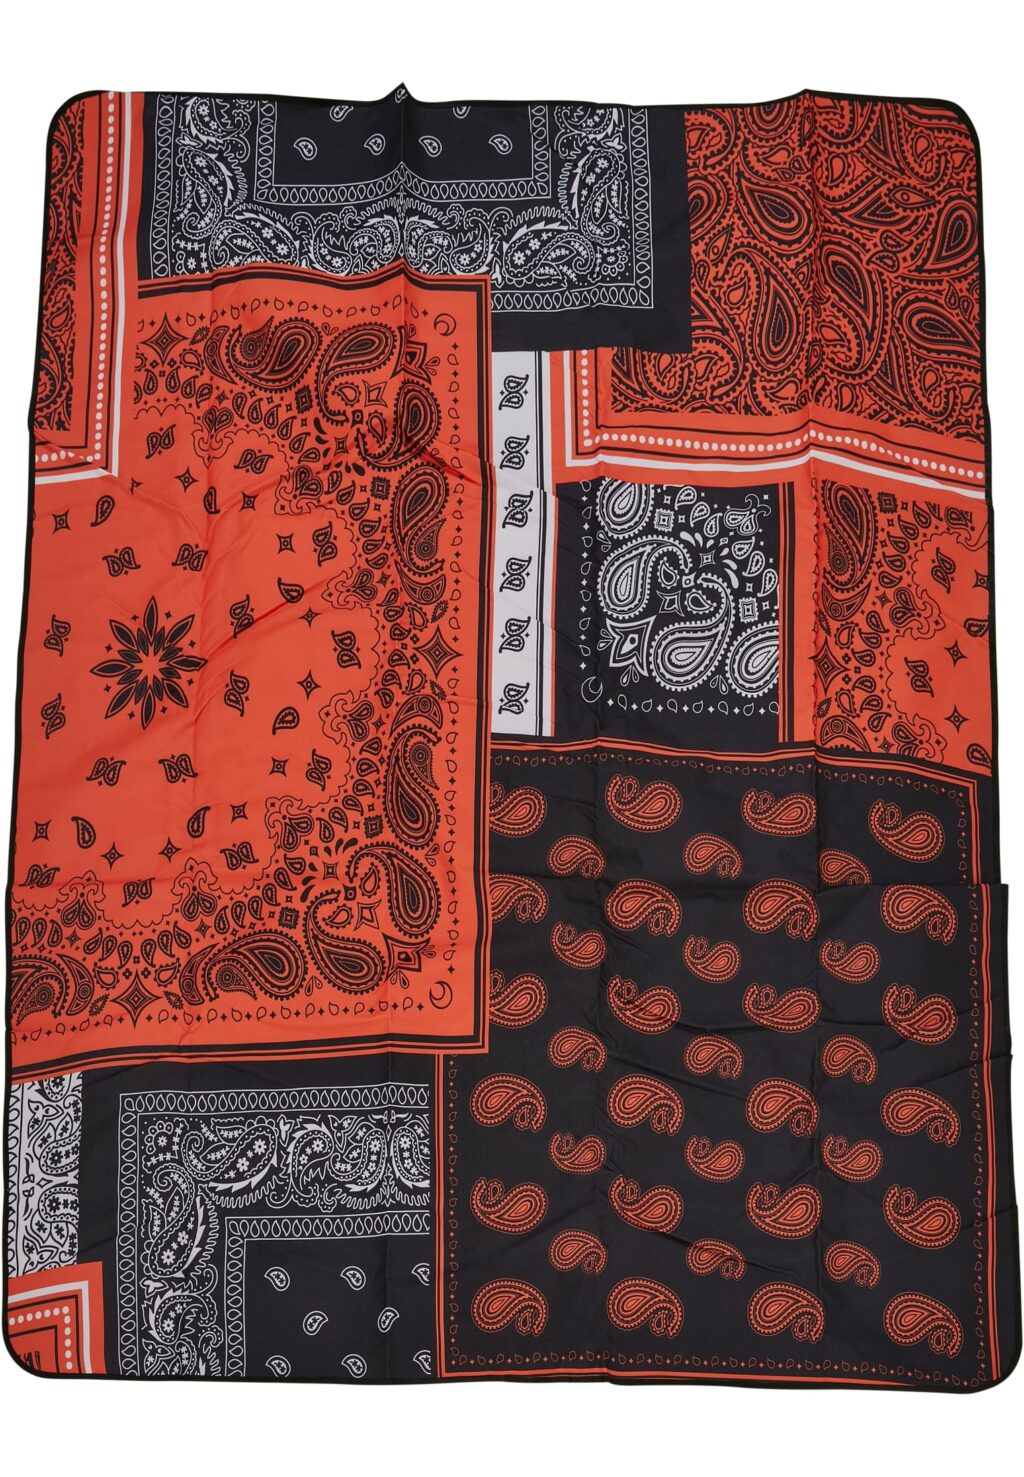 Bandana Patchwork Print Blanket black/orange one TB5120